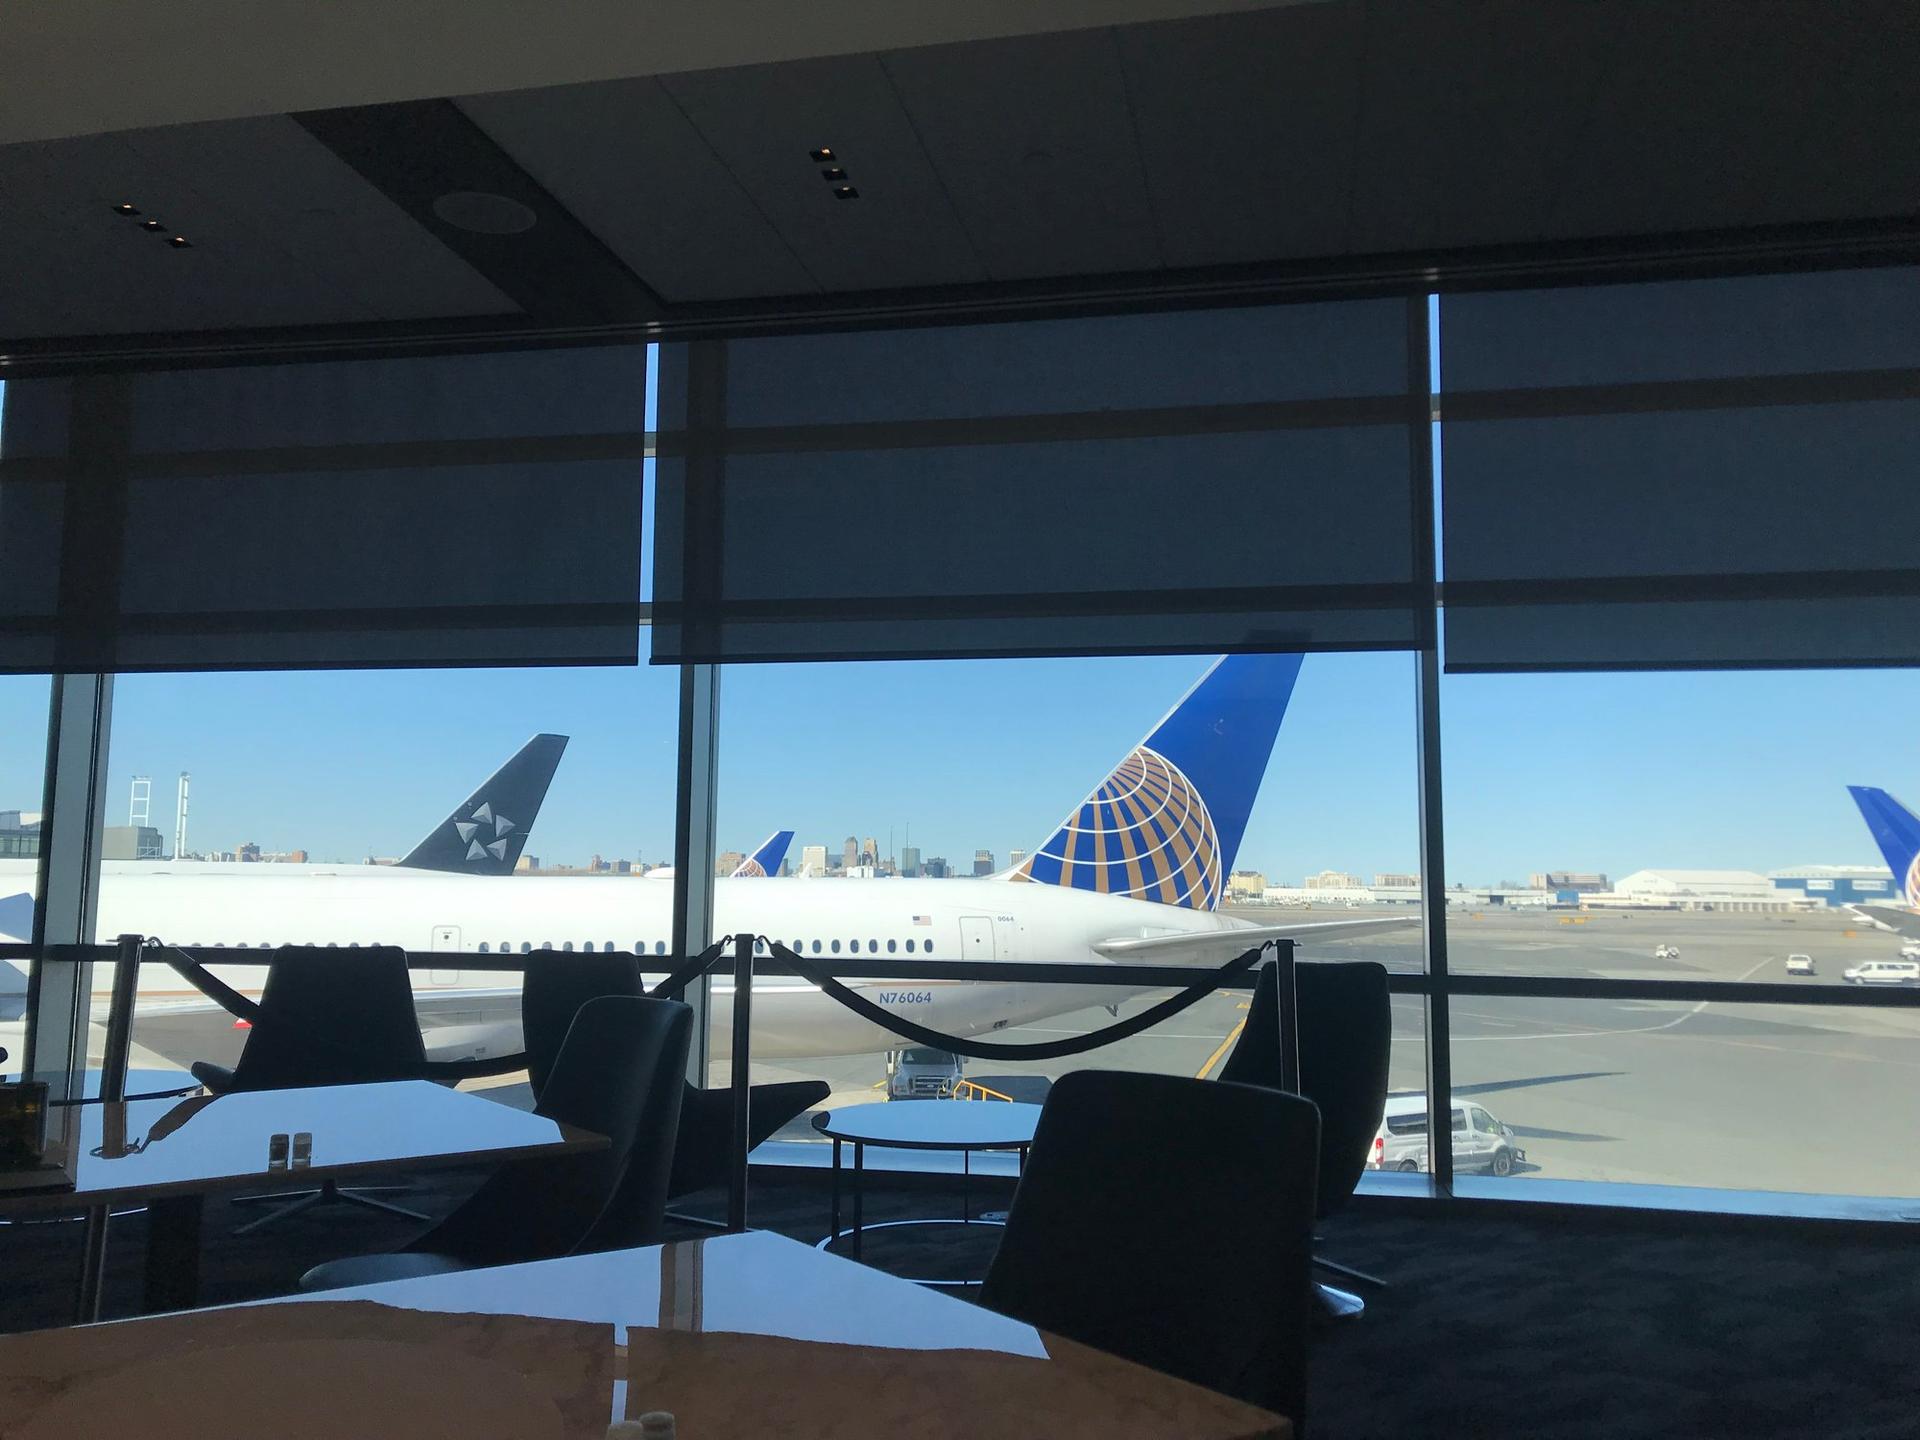 United Airlines Polaris Lounge image 3 of 13